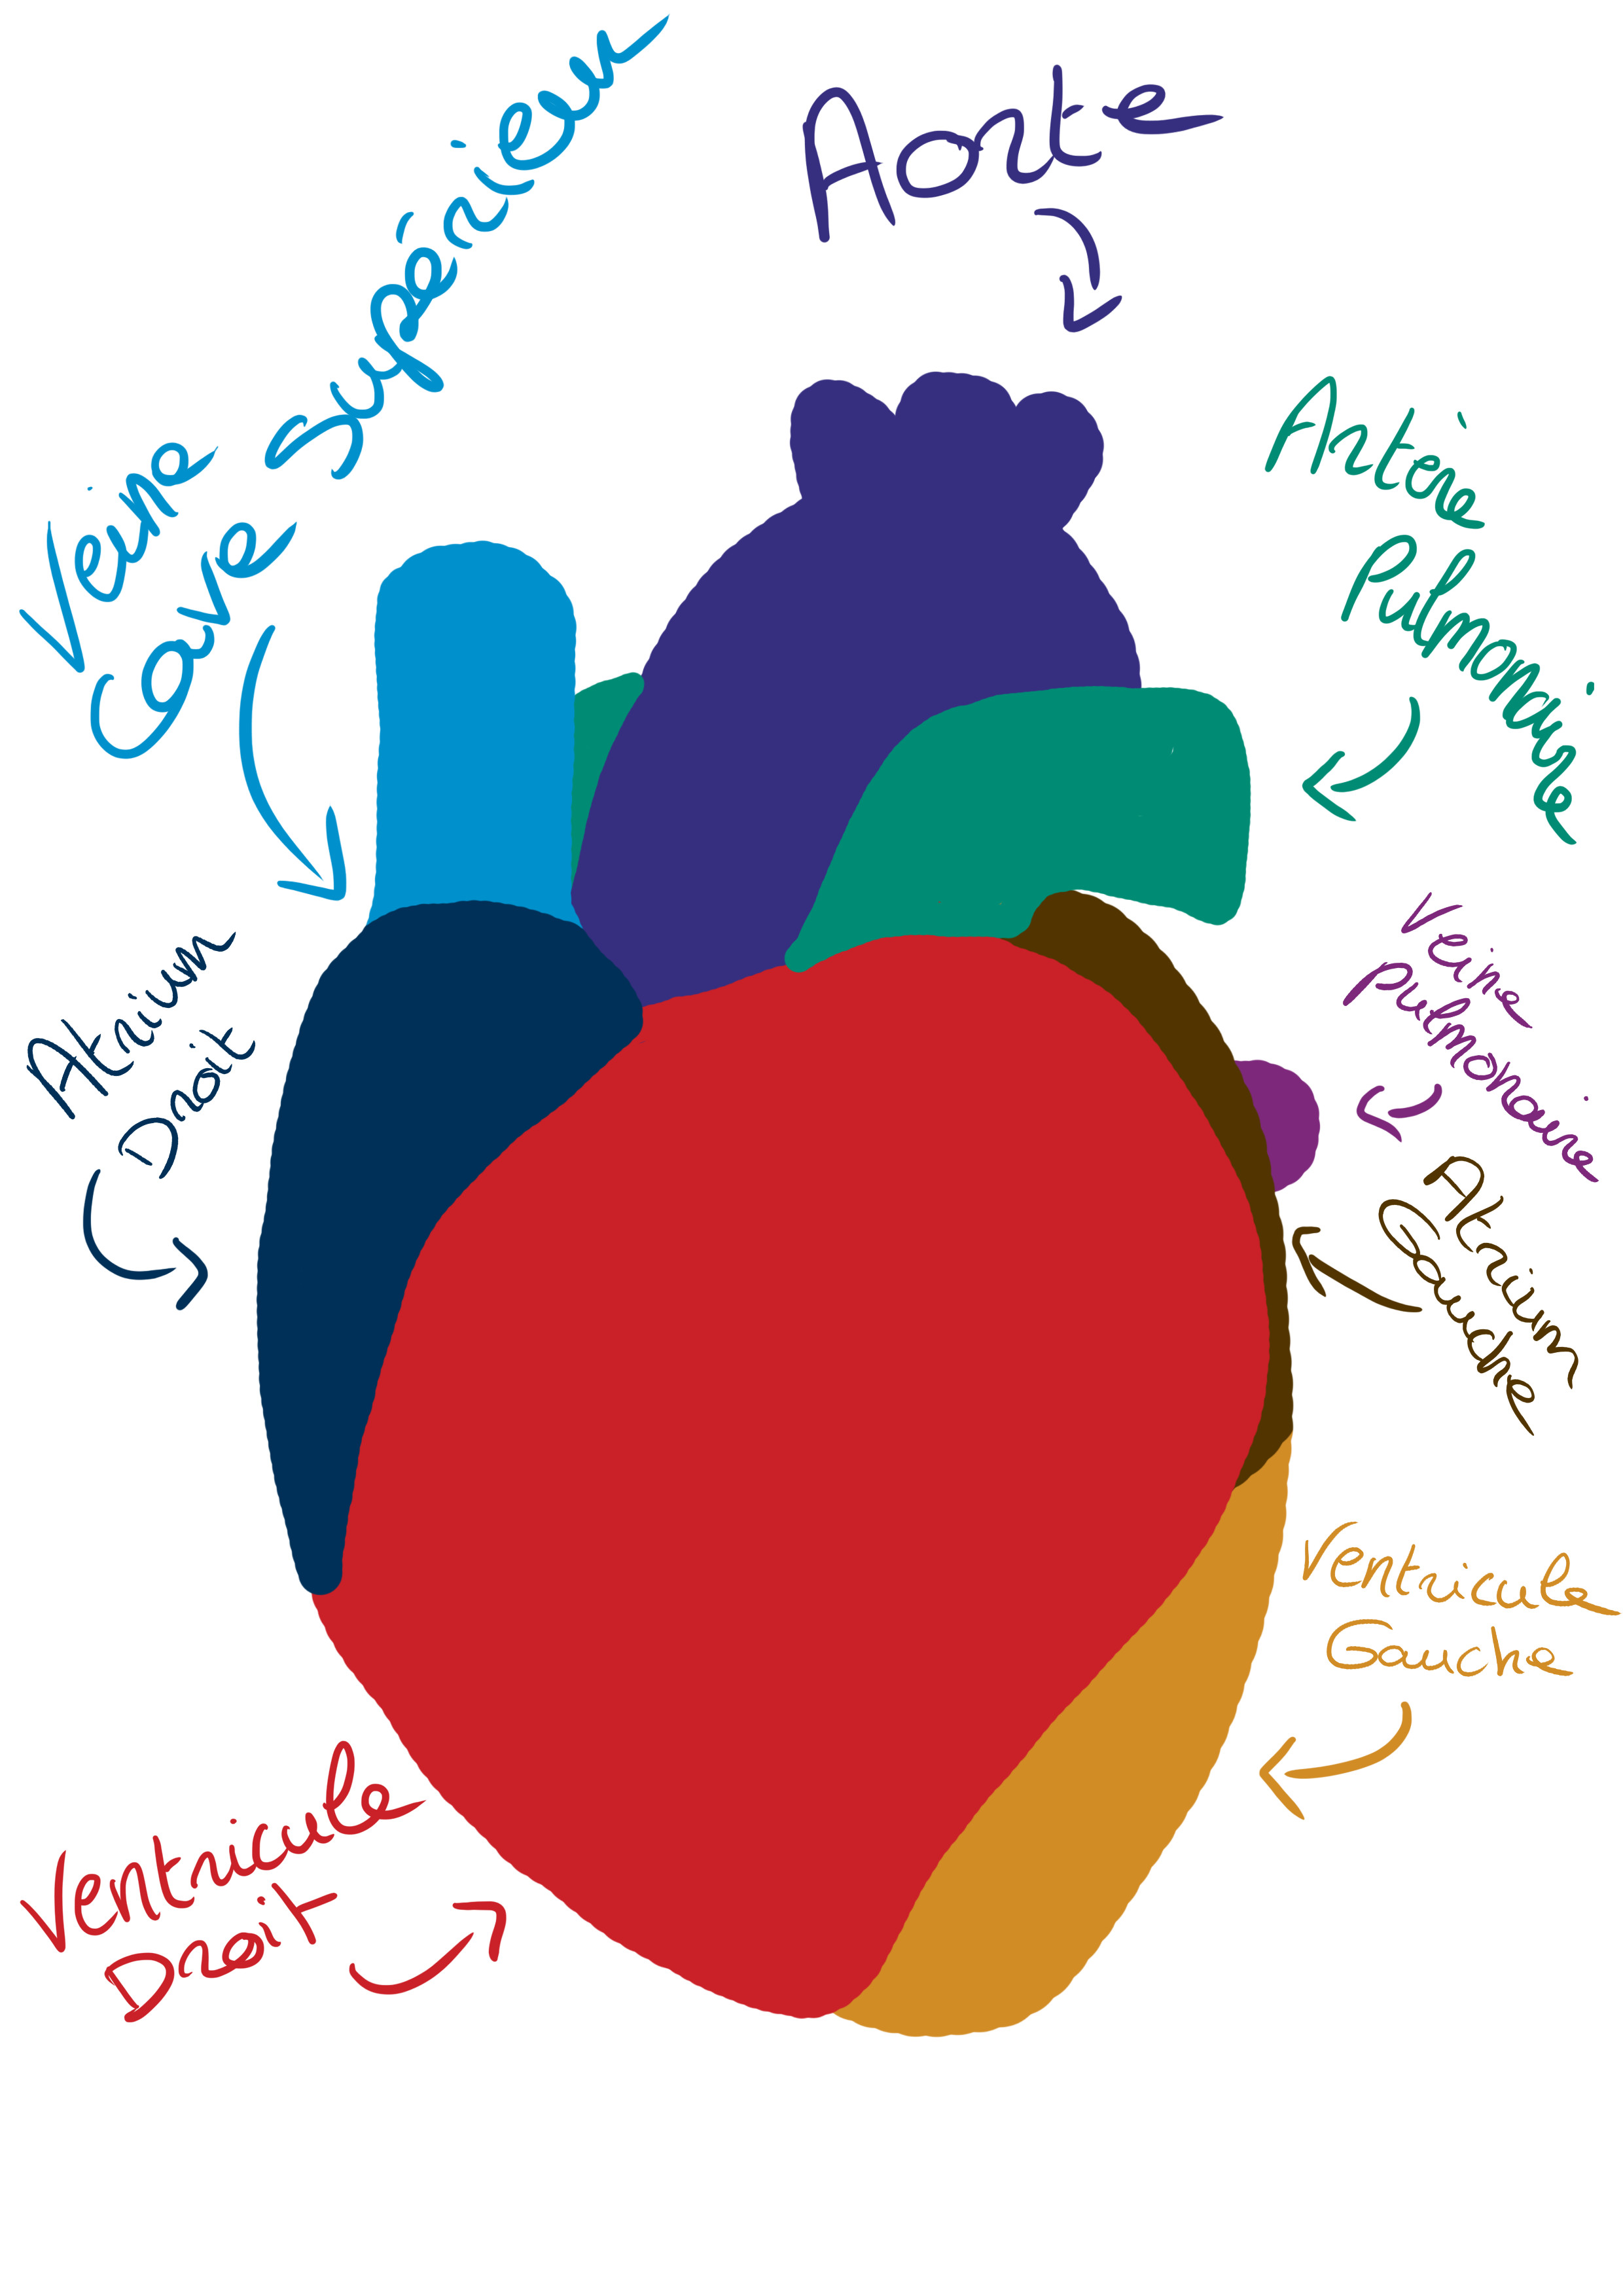 schéma explicatif des différentes parties du coeur humain